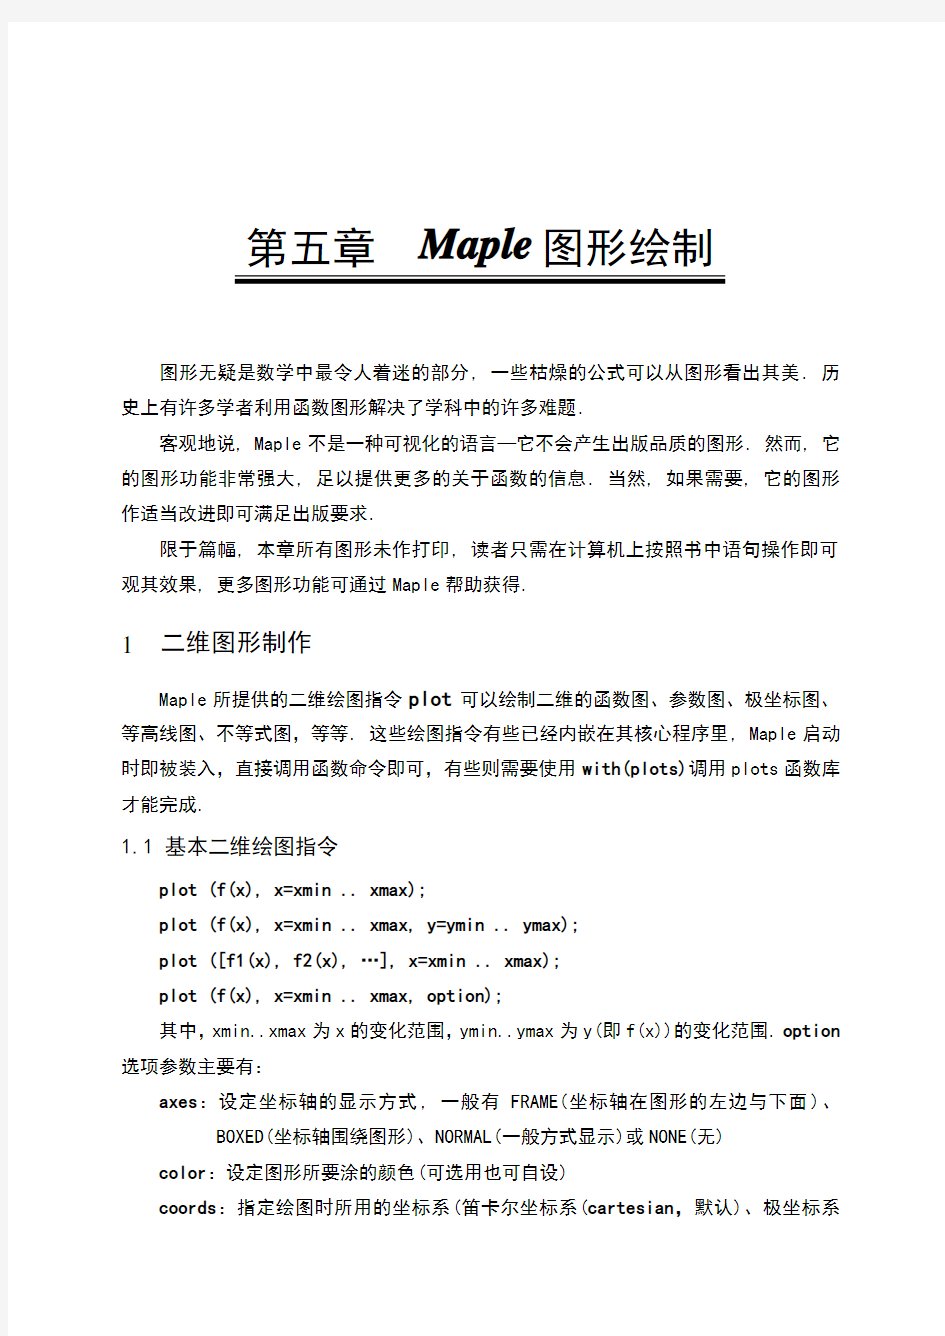 maple-图形制作